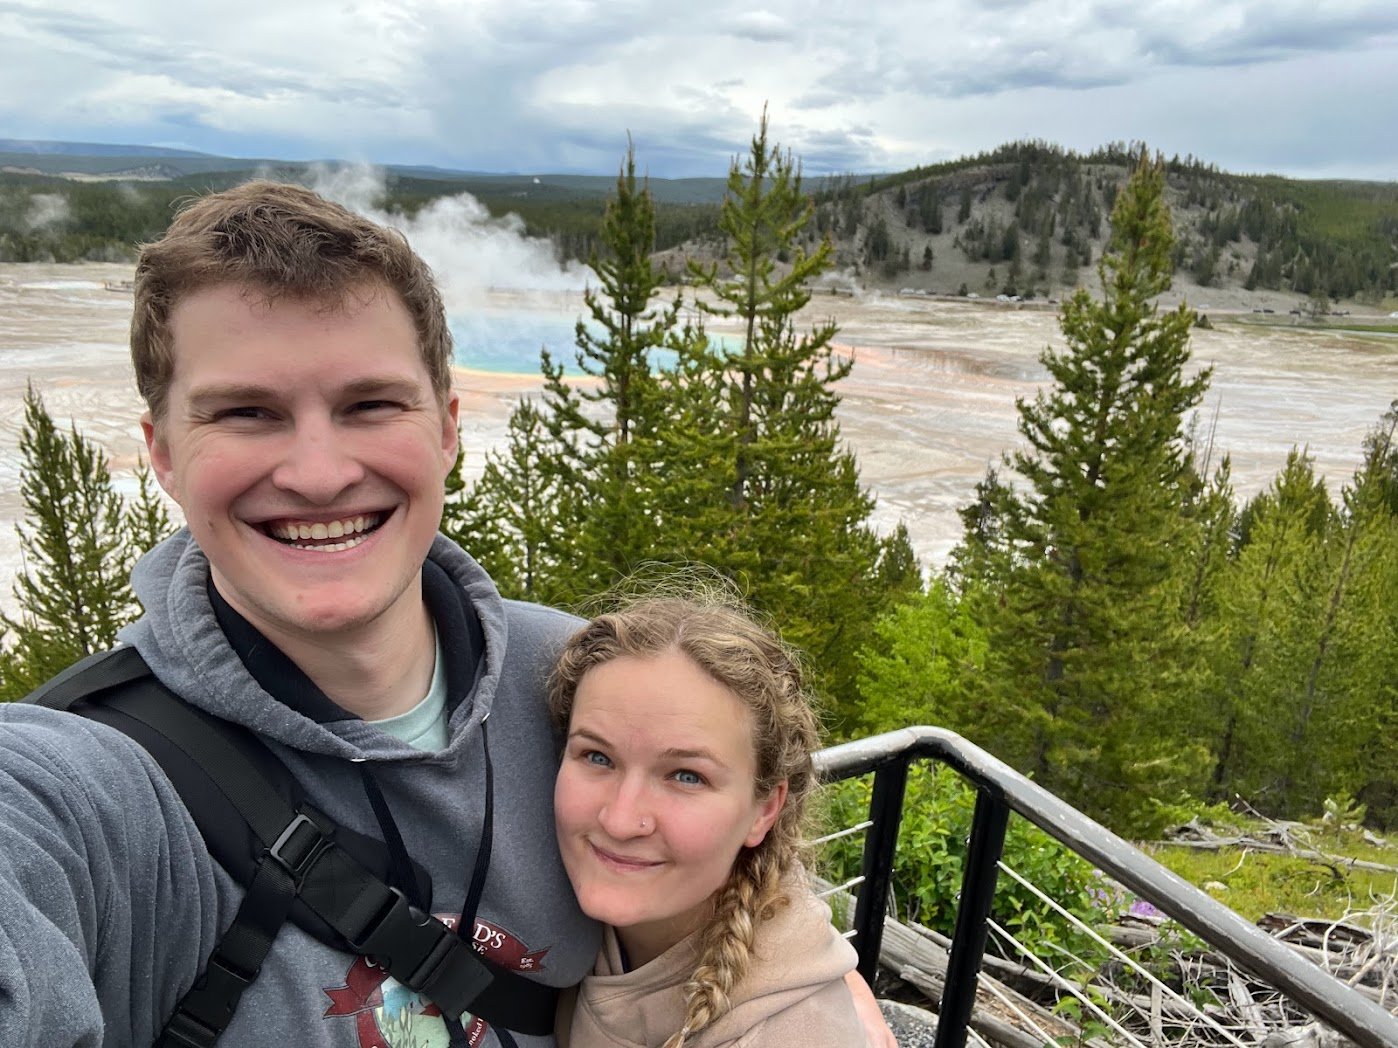 Rachel and her partner in Yellowstone